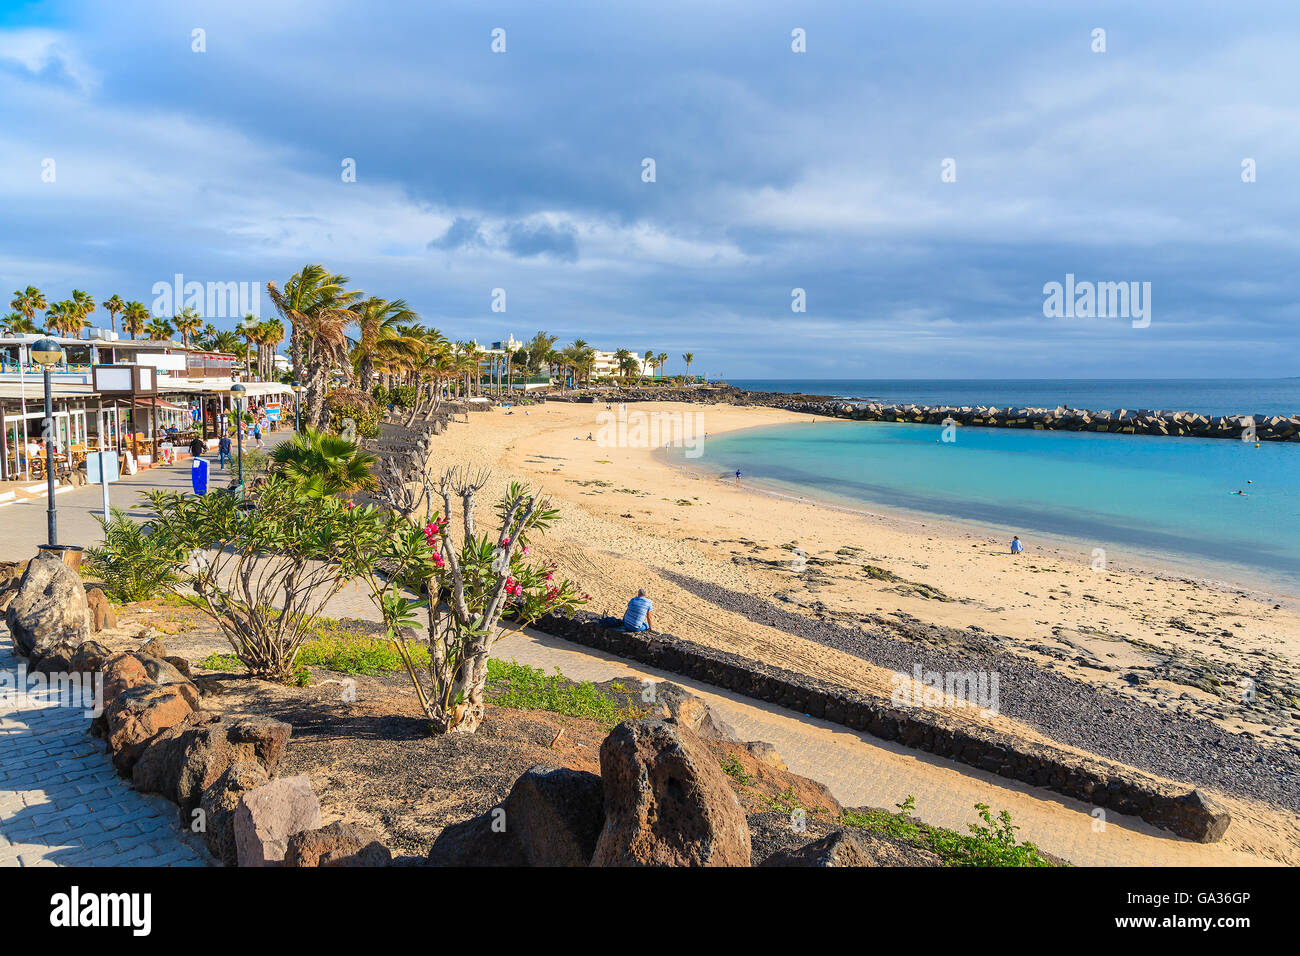 Flamingo beach in Playa Blanca holiday village on coast of Lanzarote island, Spain Stock Photo